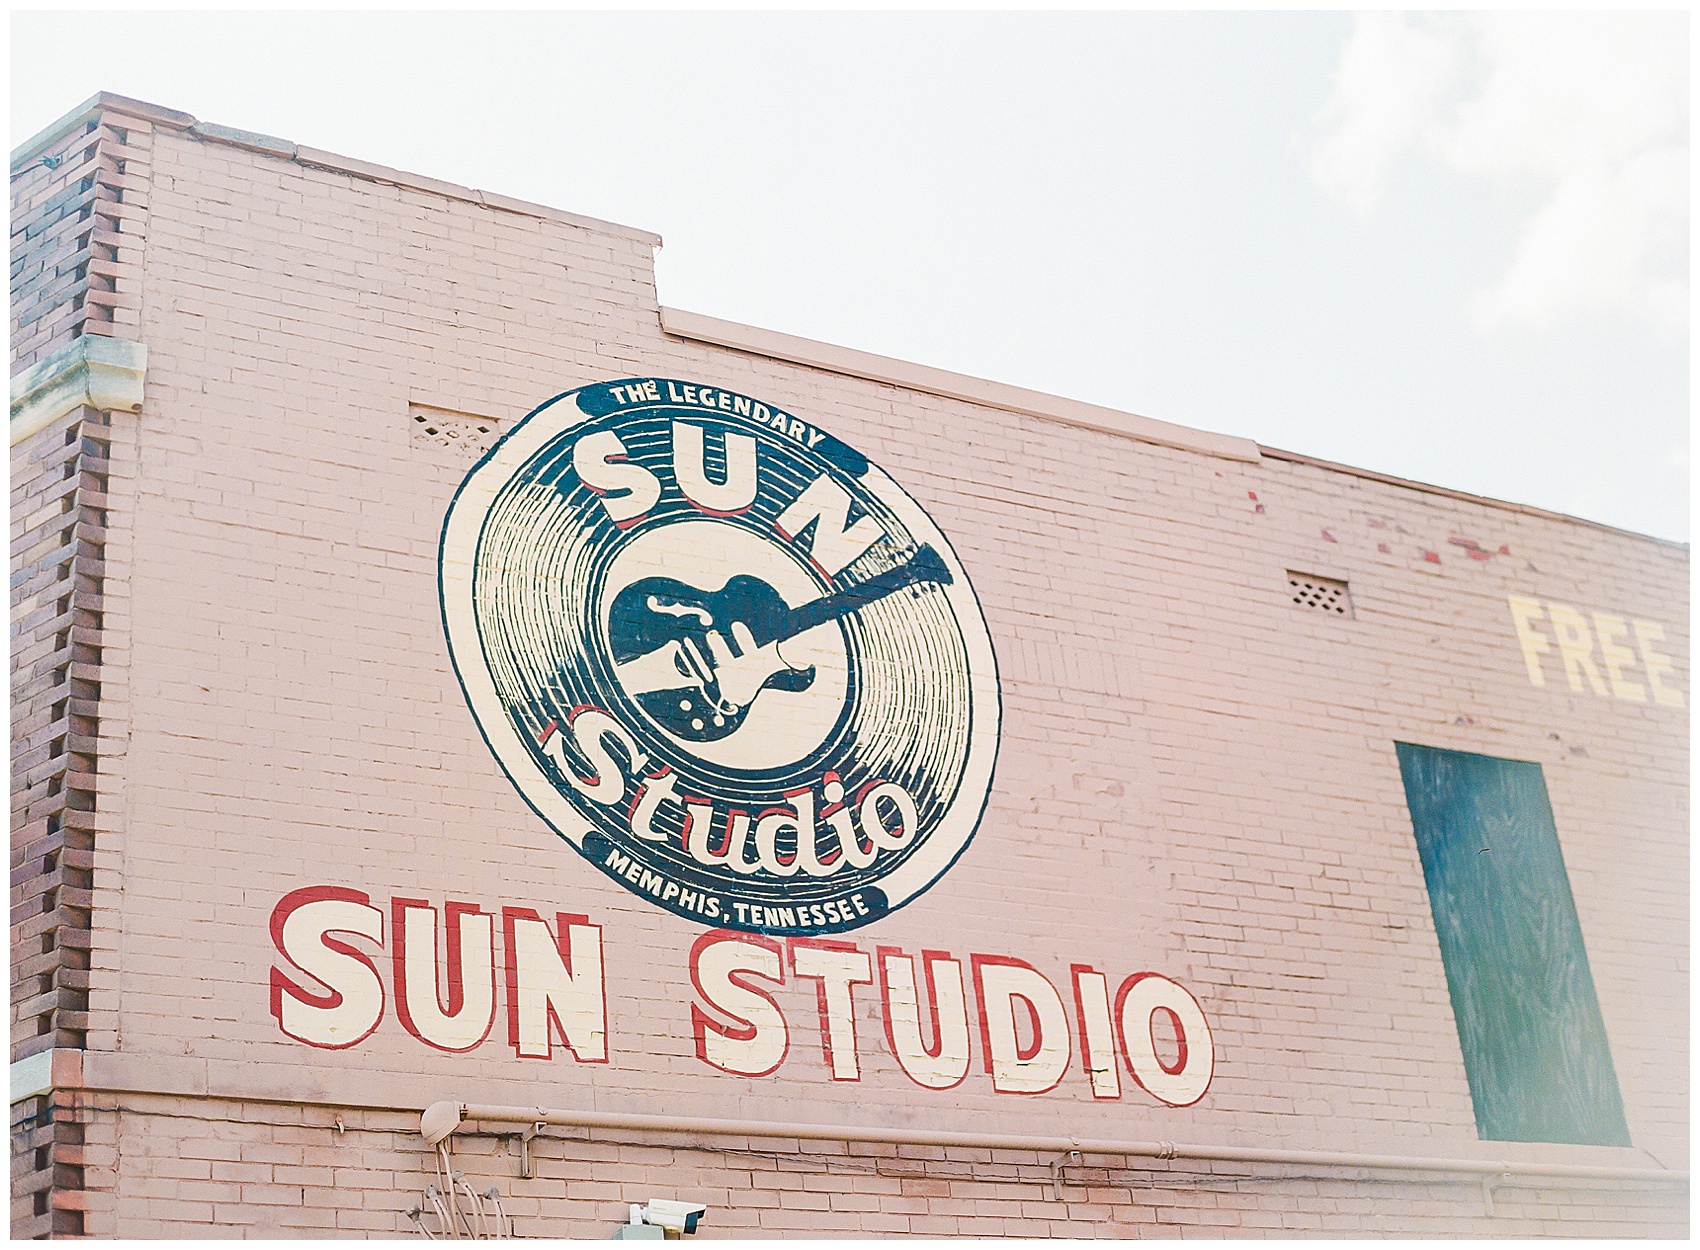 Road trip 2020 memphis Tennessee sun studio